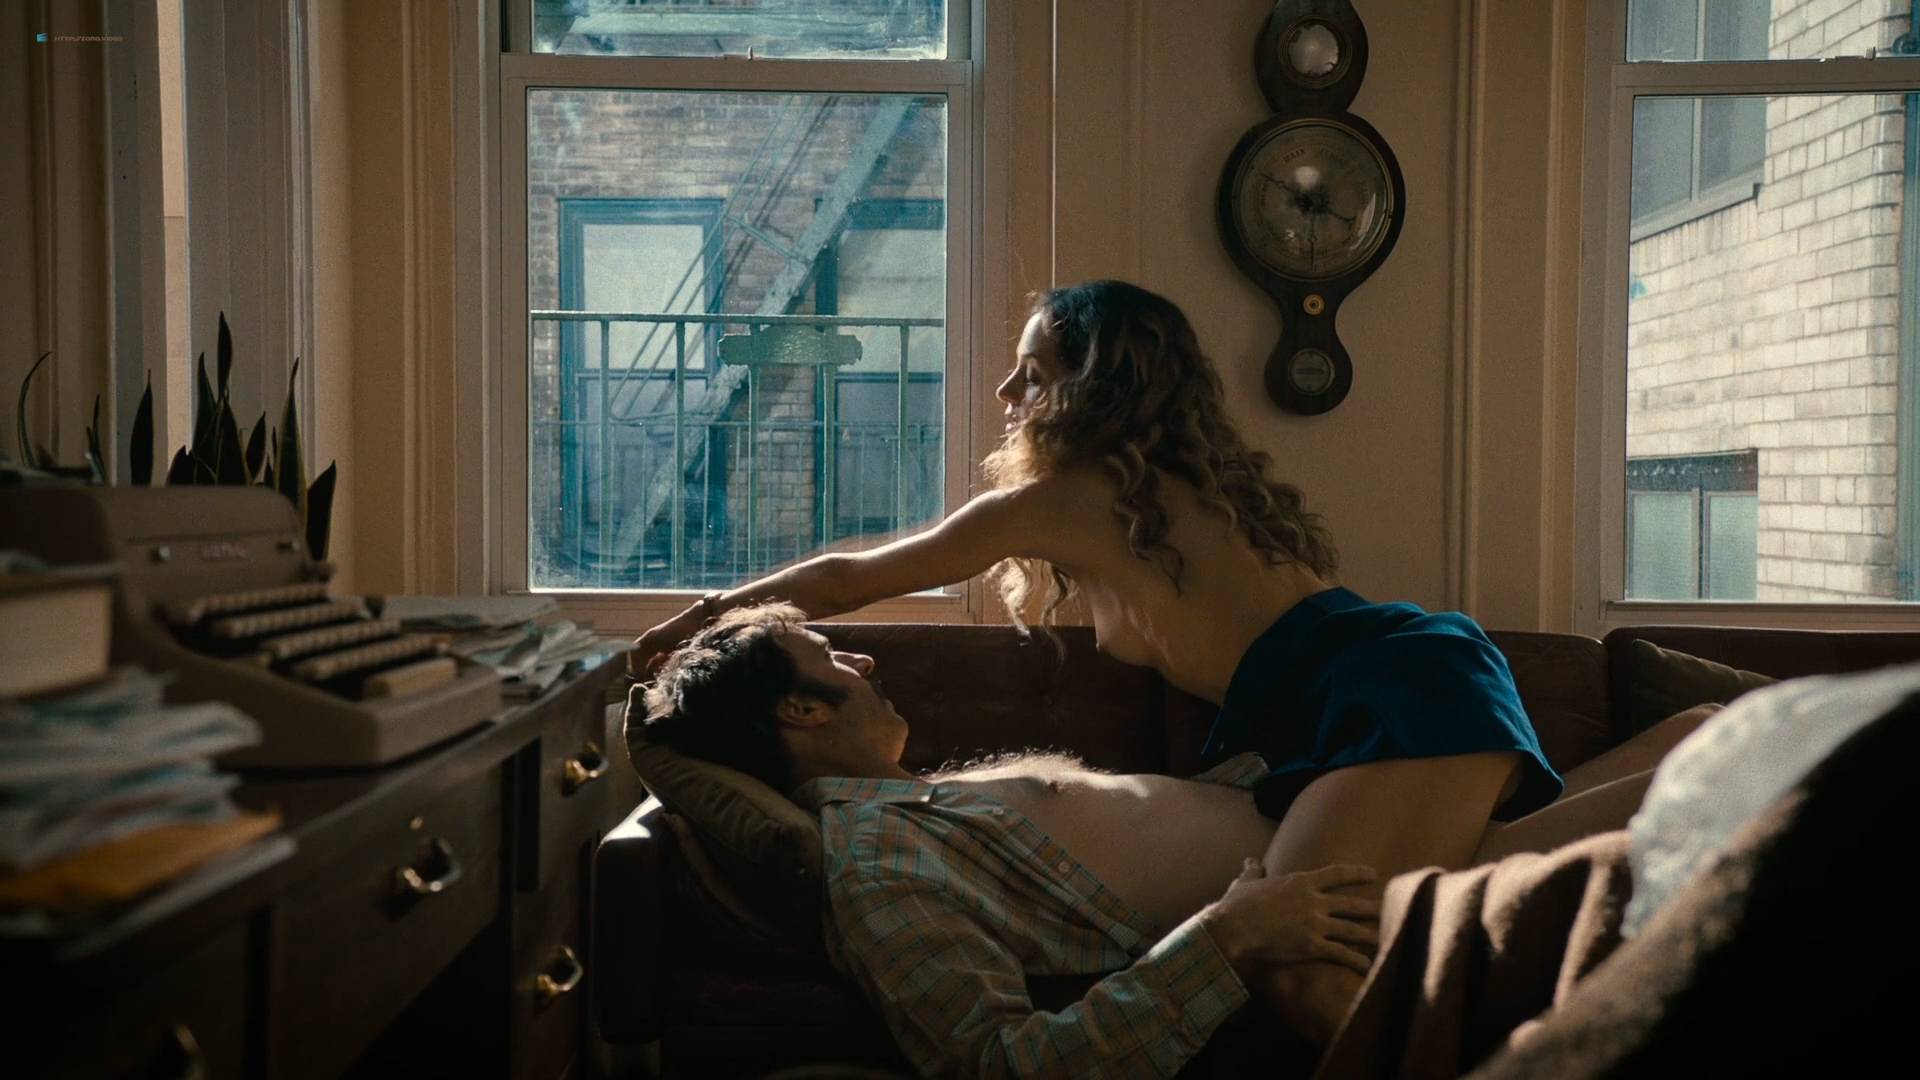 Maggie-Gyllenhaal-nude-topless-Margarita-Levieva-nude-others-nude-too-The-D...